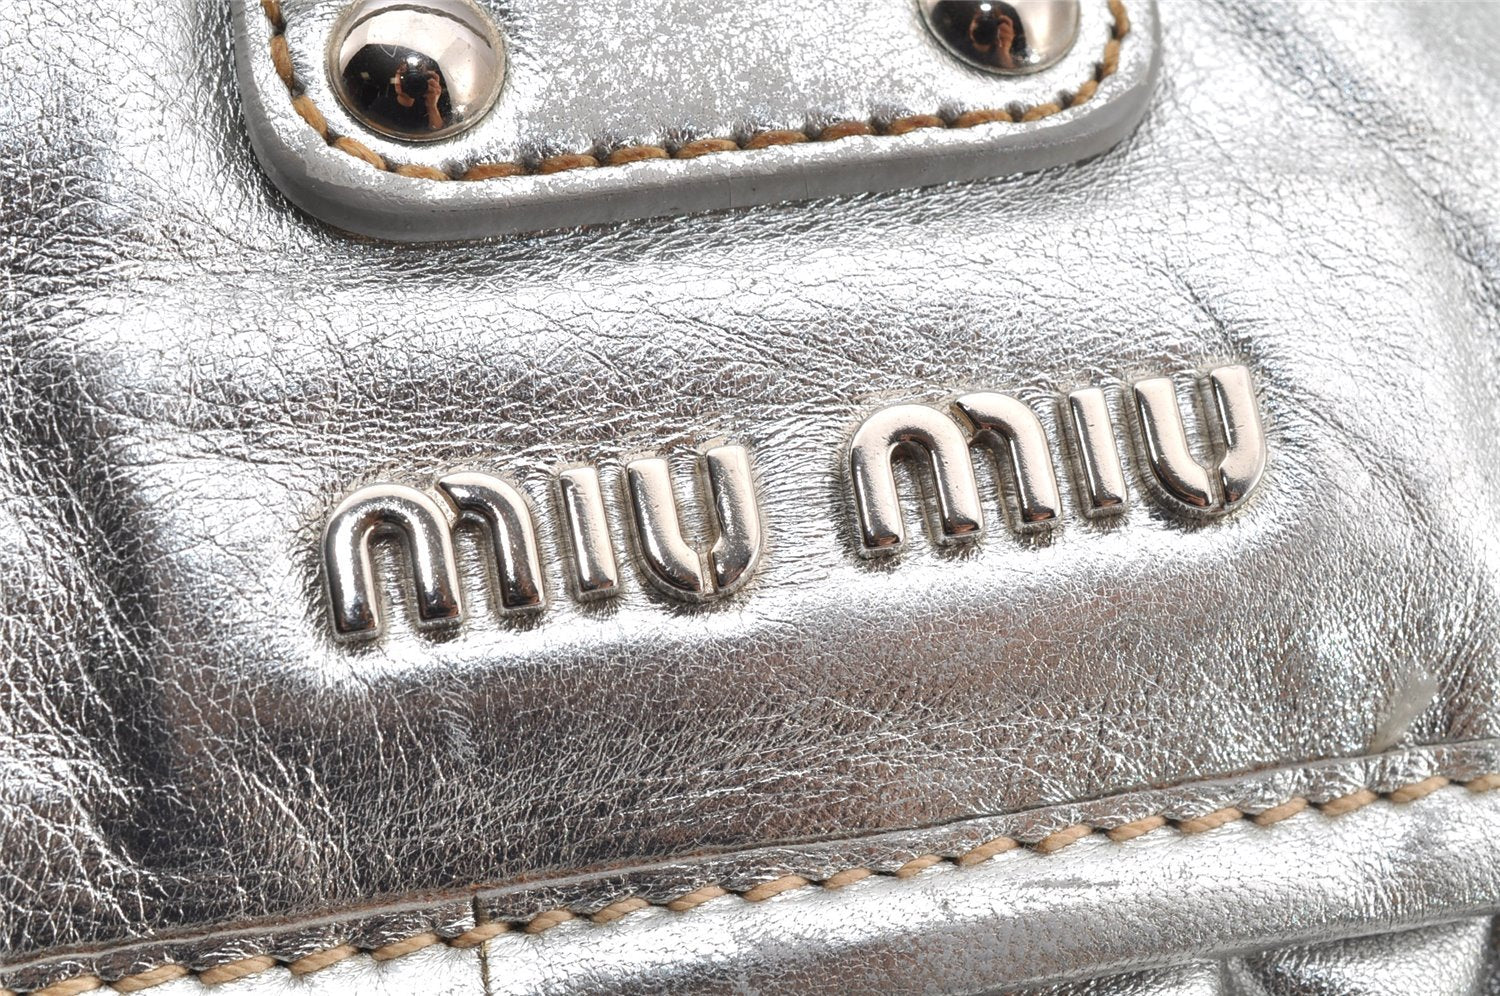 Authentic MIU MIU Matelasse Leather 2Way Shoulder Tote Bag Silver 9026I